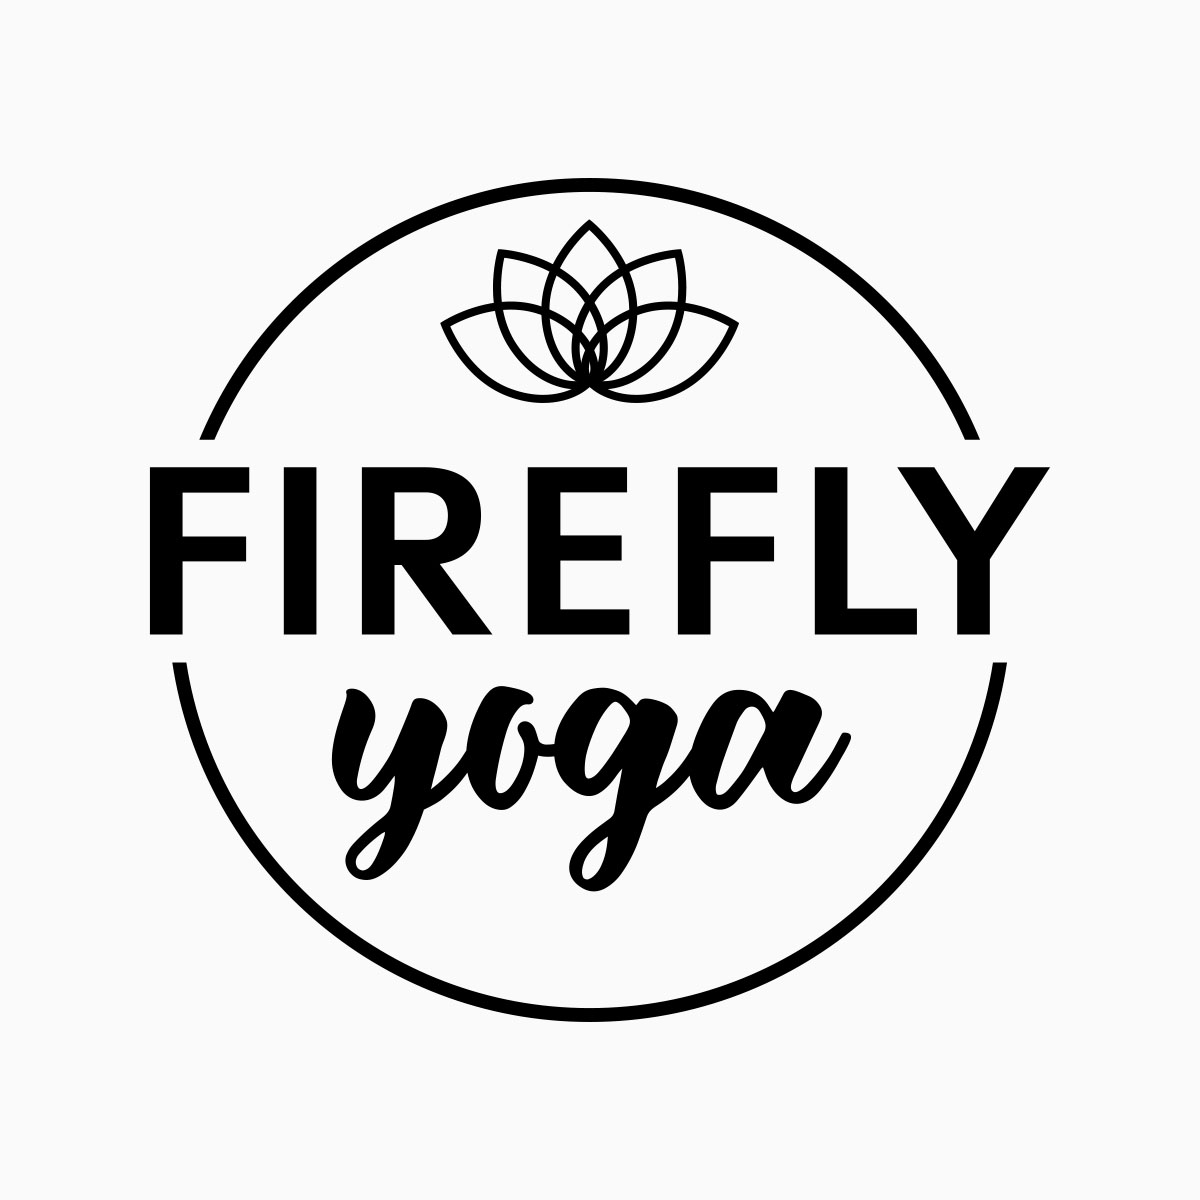 Firefly logo.jpg